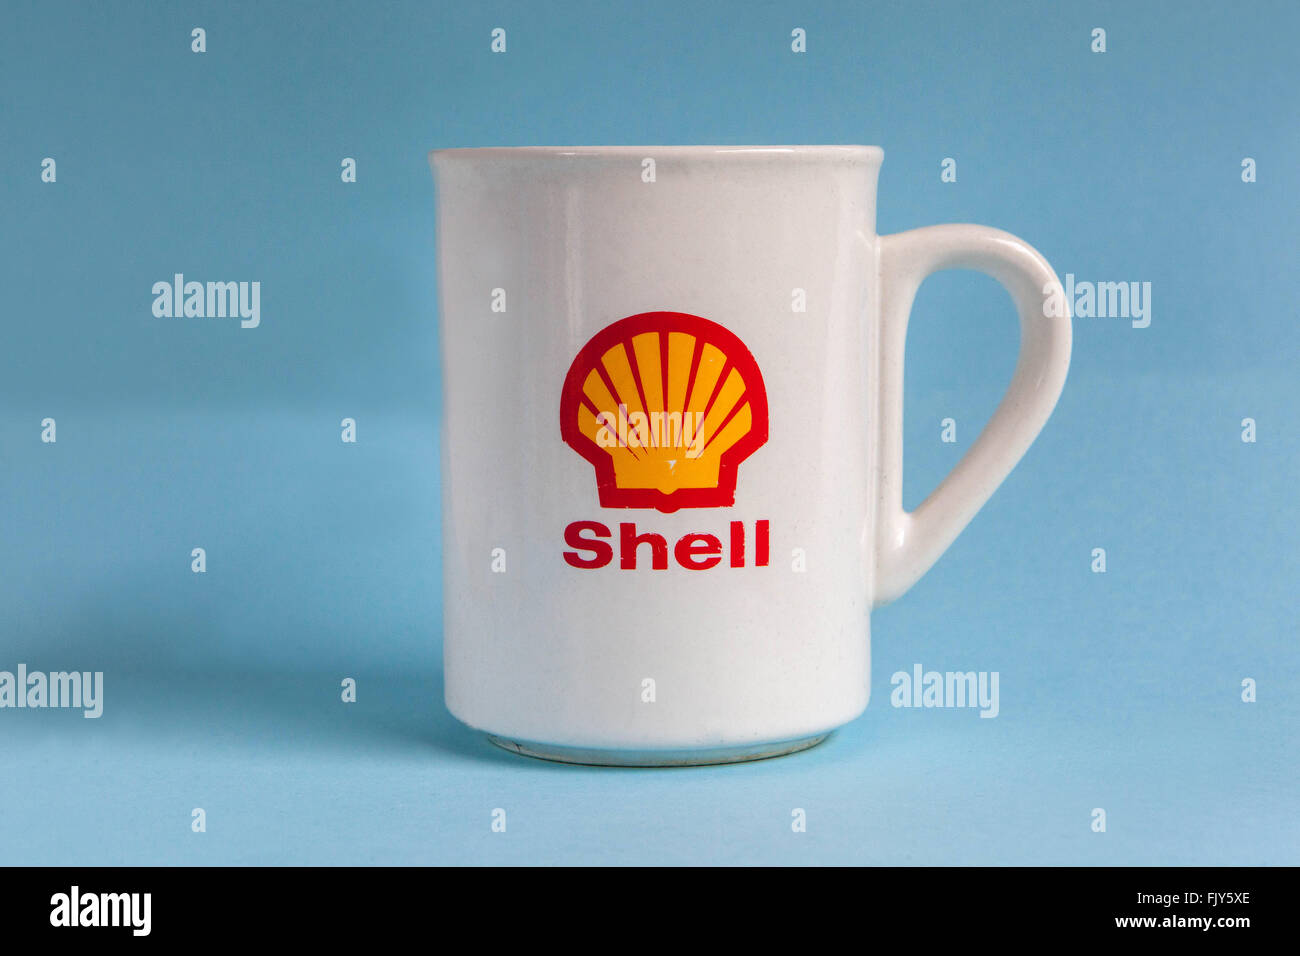 cup, gift item shell oil company, logo, sign mug Stock Photo